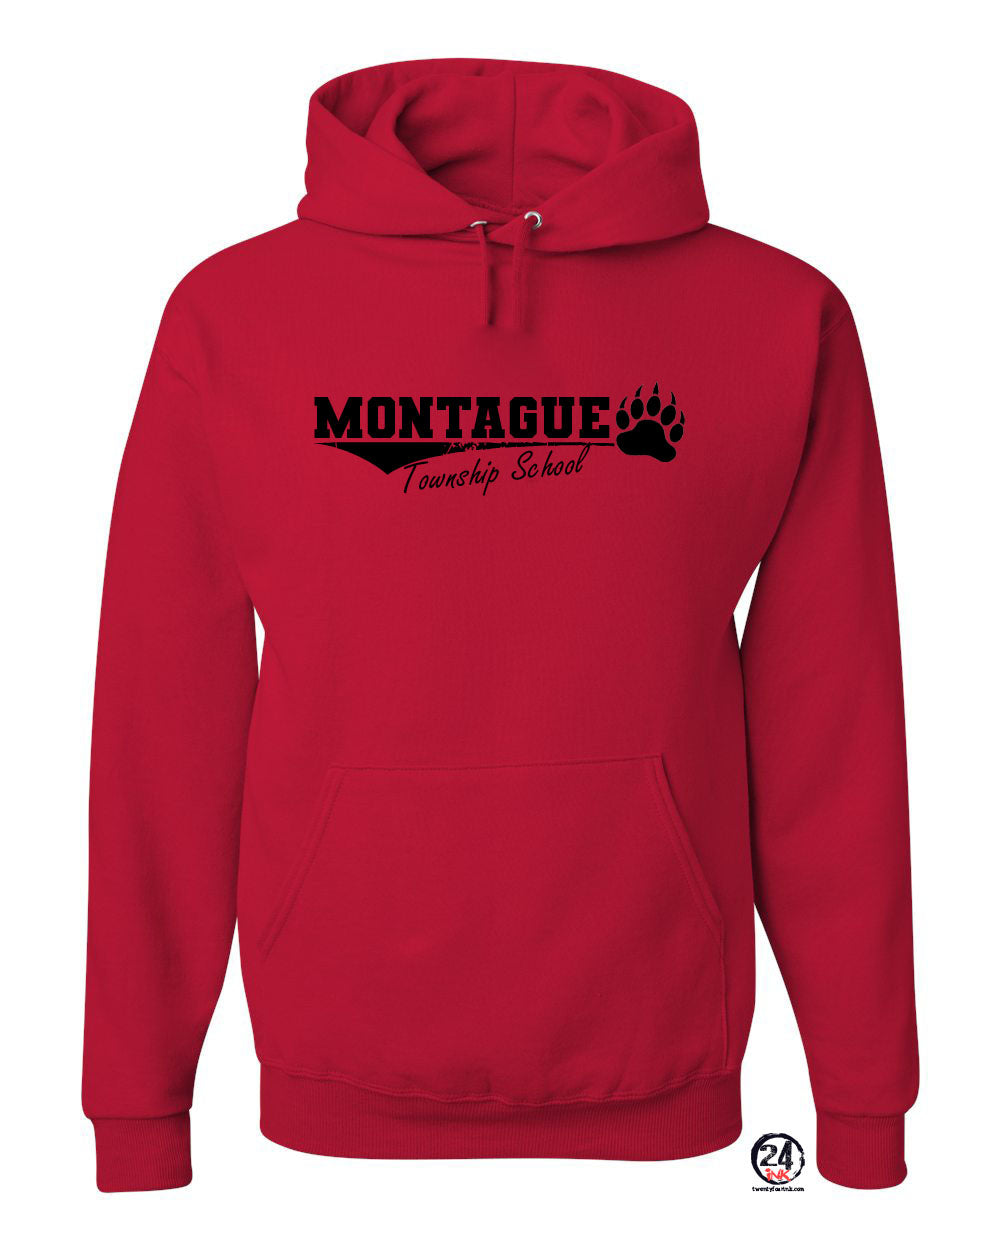 Montague Design 1 Hooded Sweatshirt